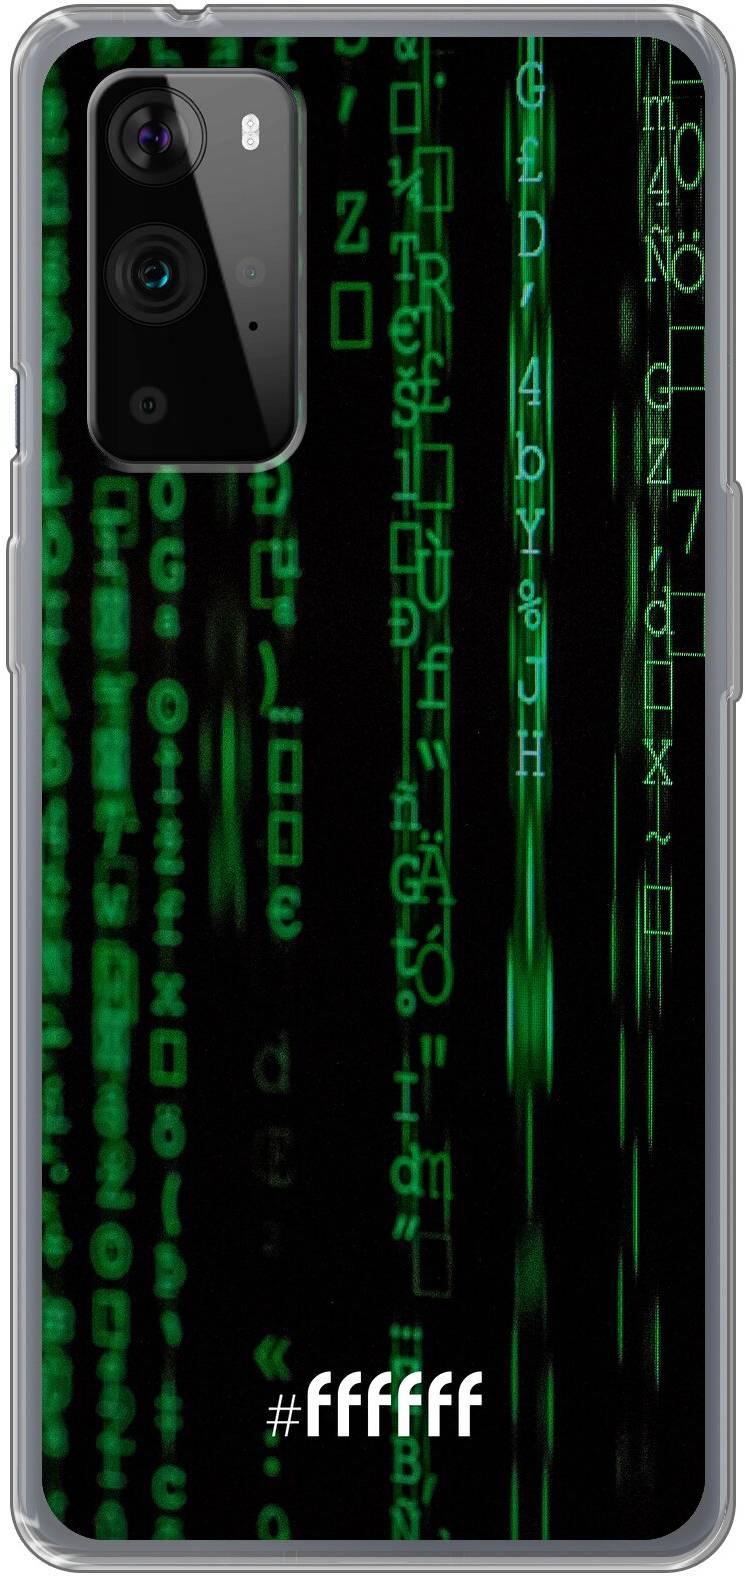 Hacking The Matrix 9 Pro